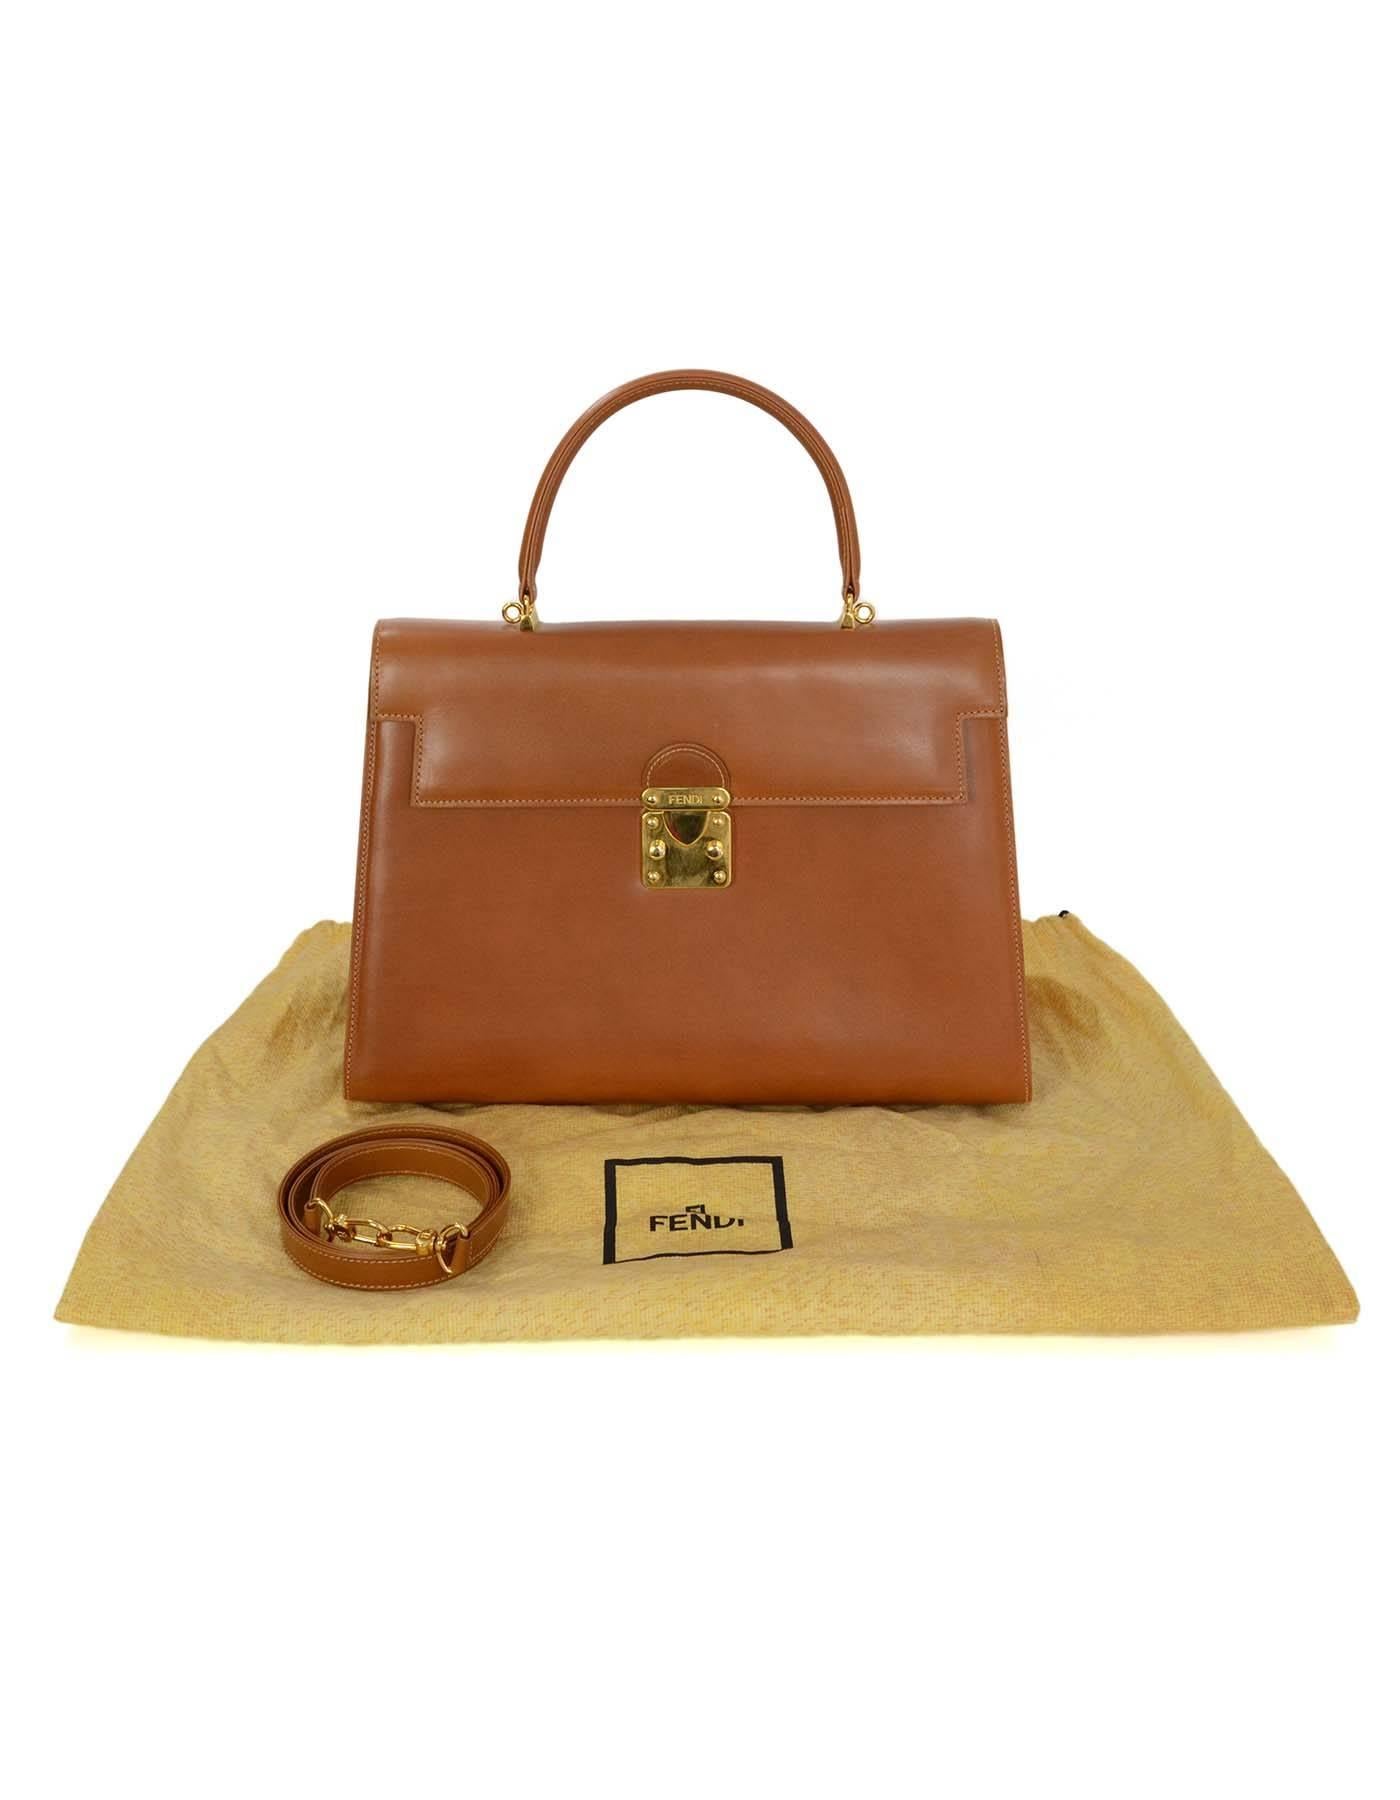 Fendi Vintage Tan Leather Kelly Style Handle Bag w/ Strap GHW 2